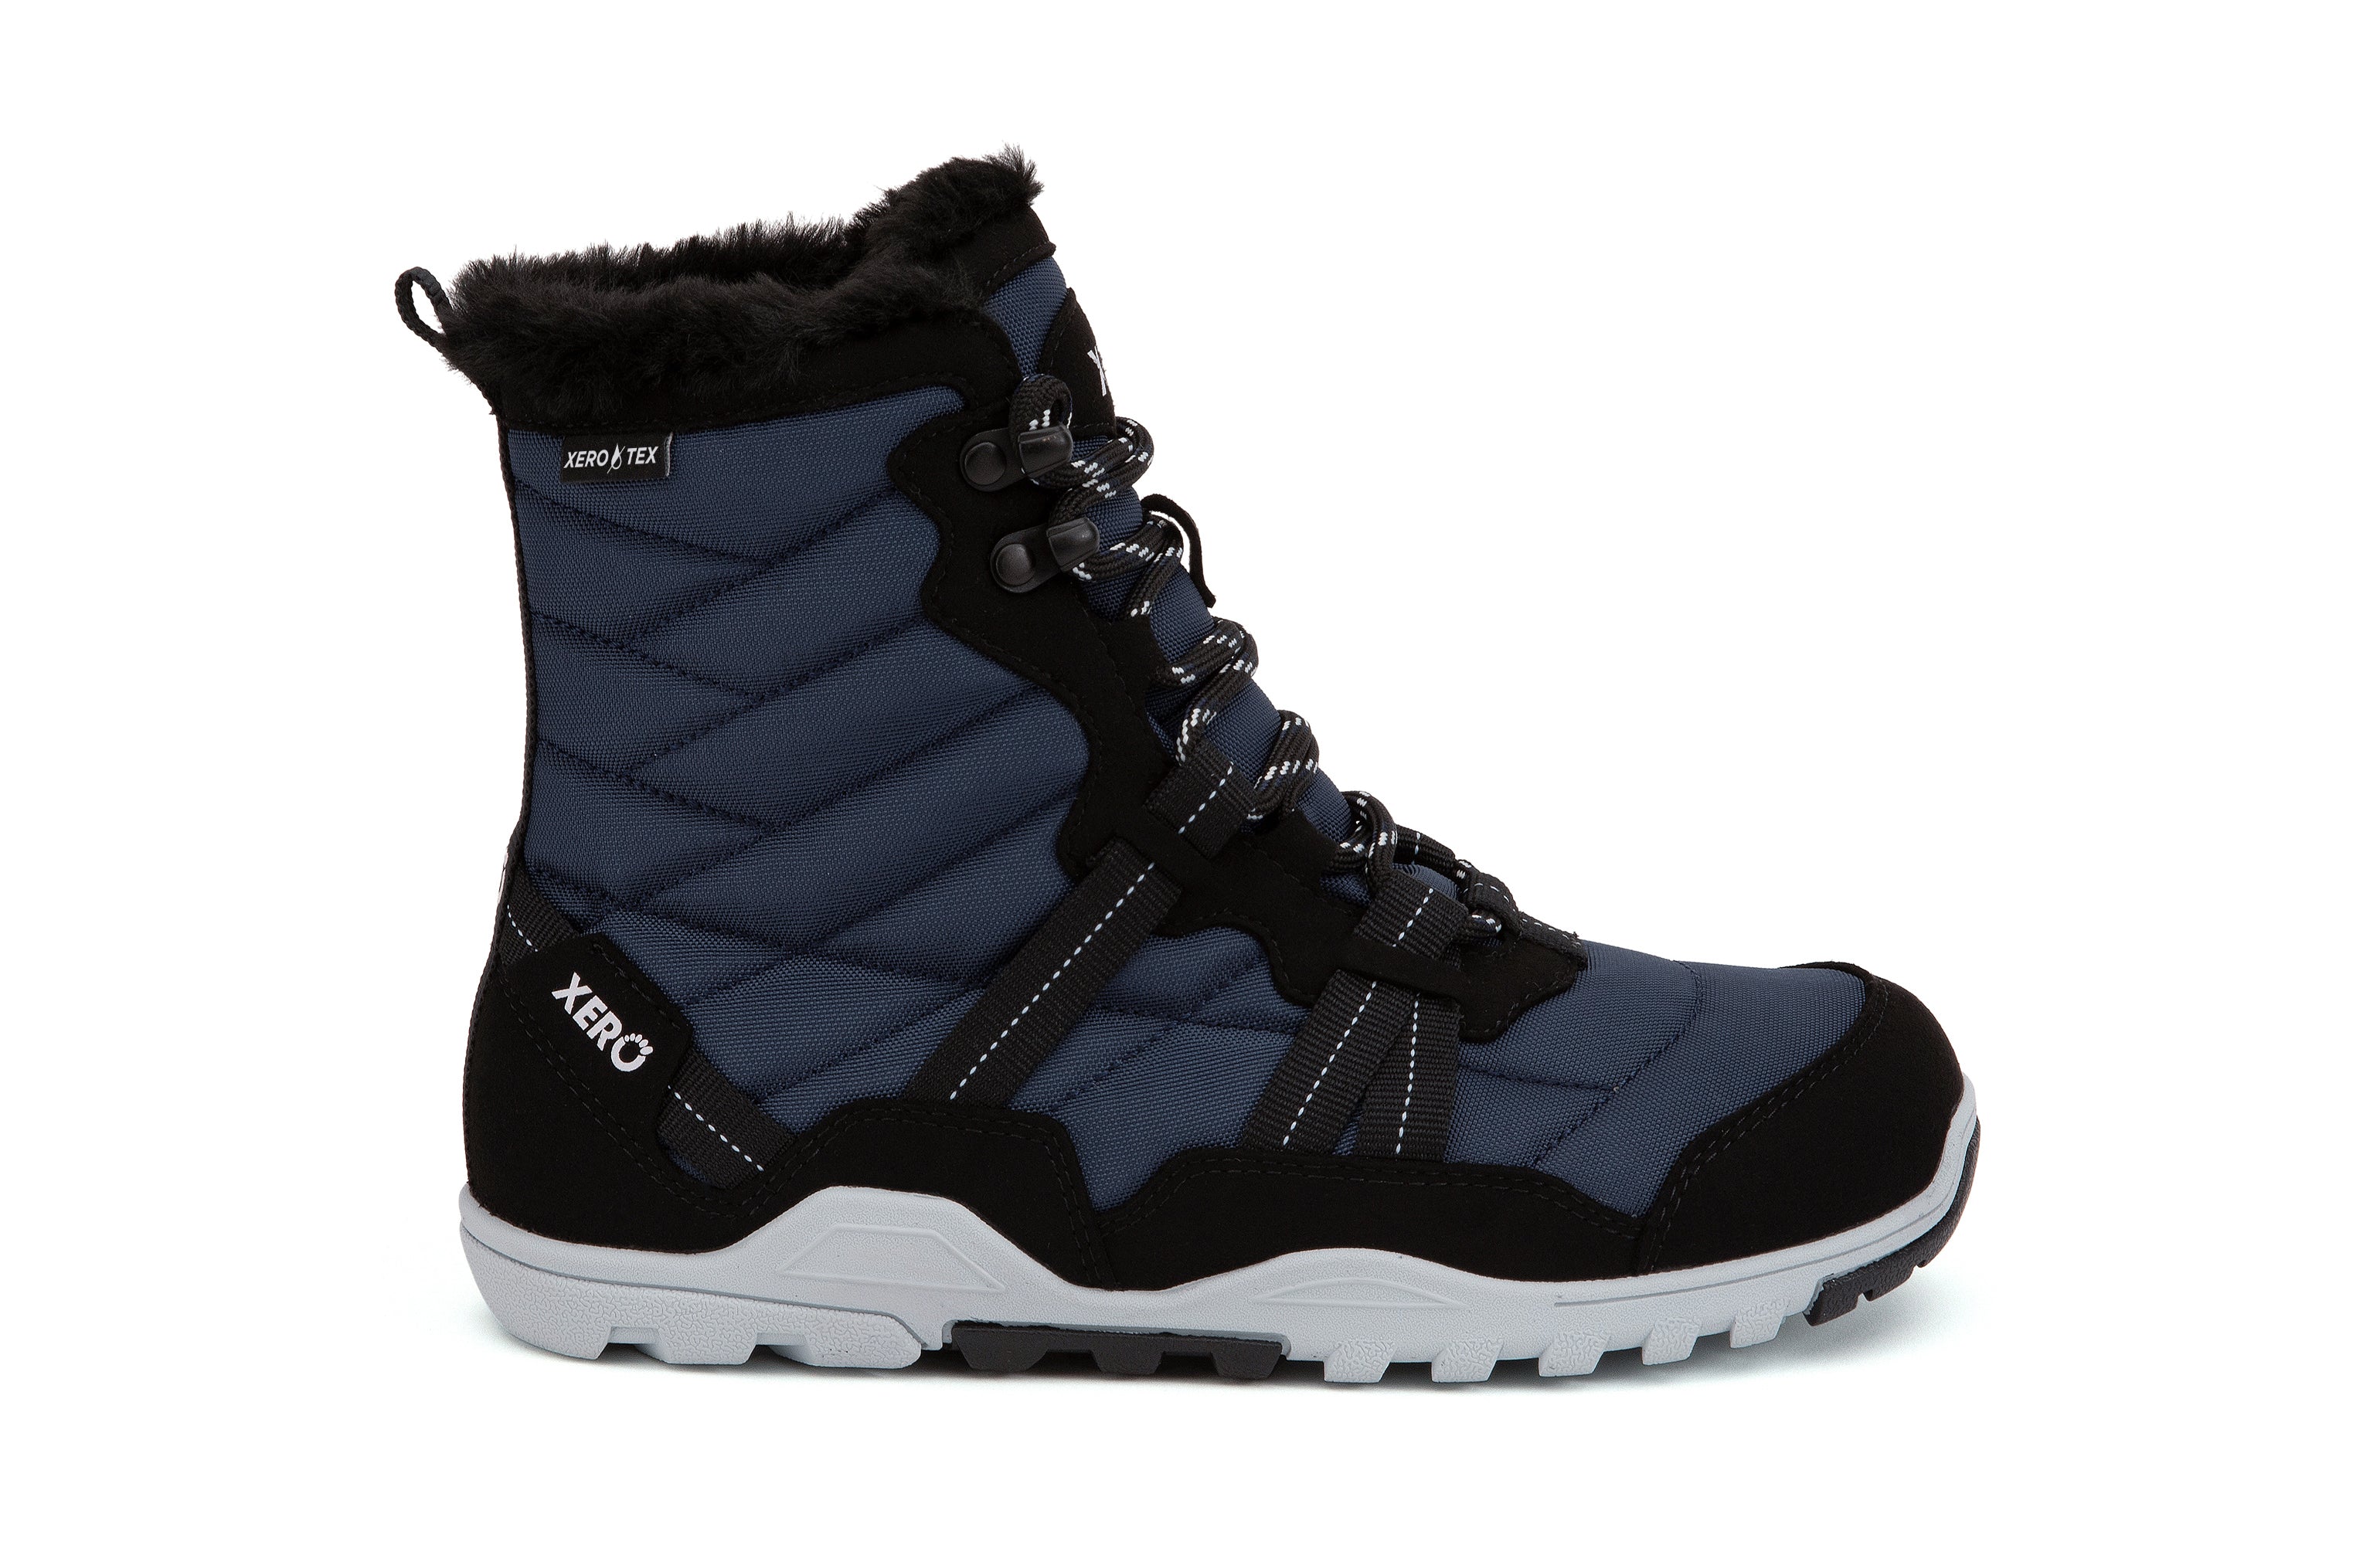 Xero Shoes Alpine Womens barfods vinterstøvler til kvinder i farven navy / black, yderside